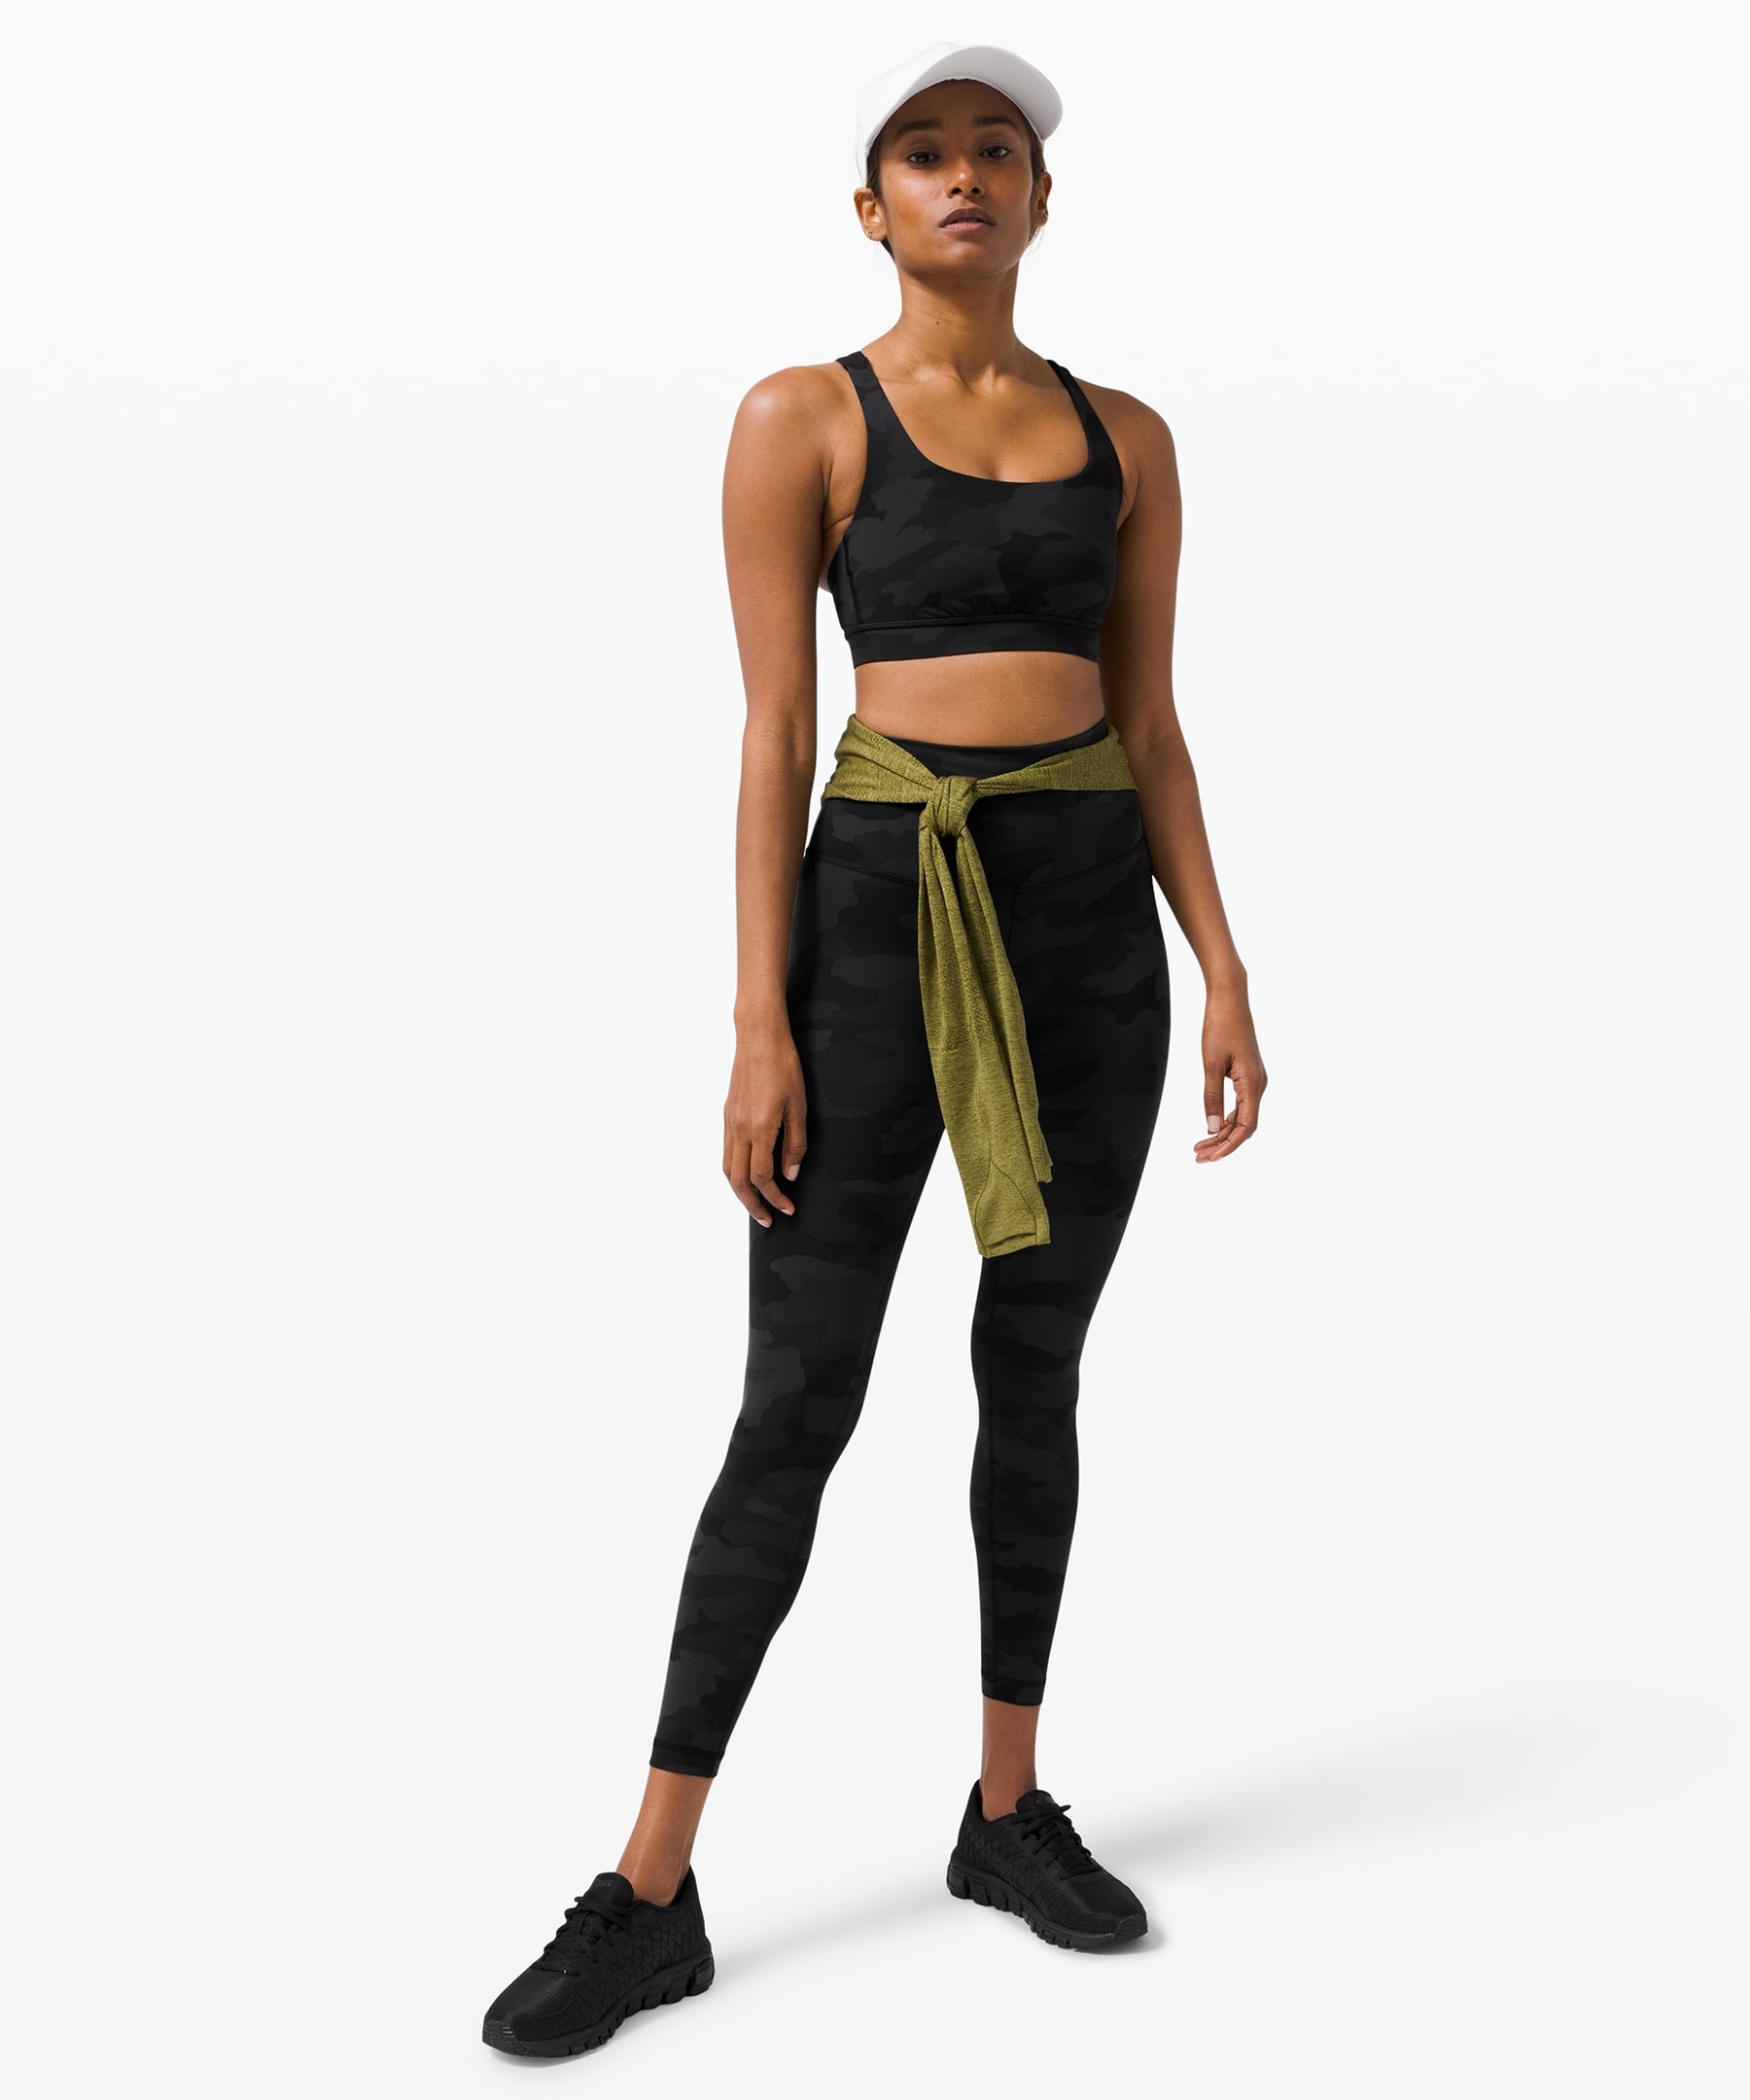 Lululemon Workout Set - Athletic apparel